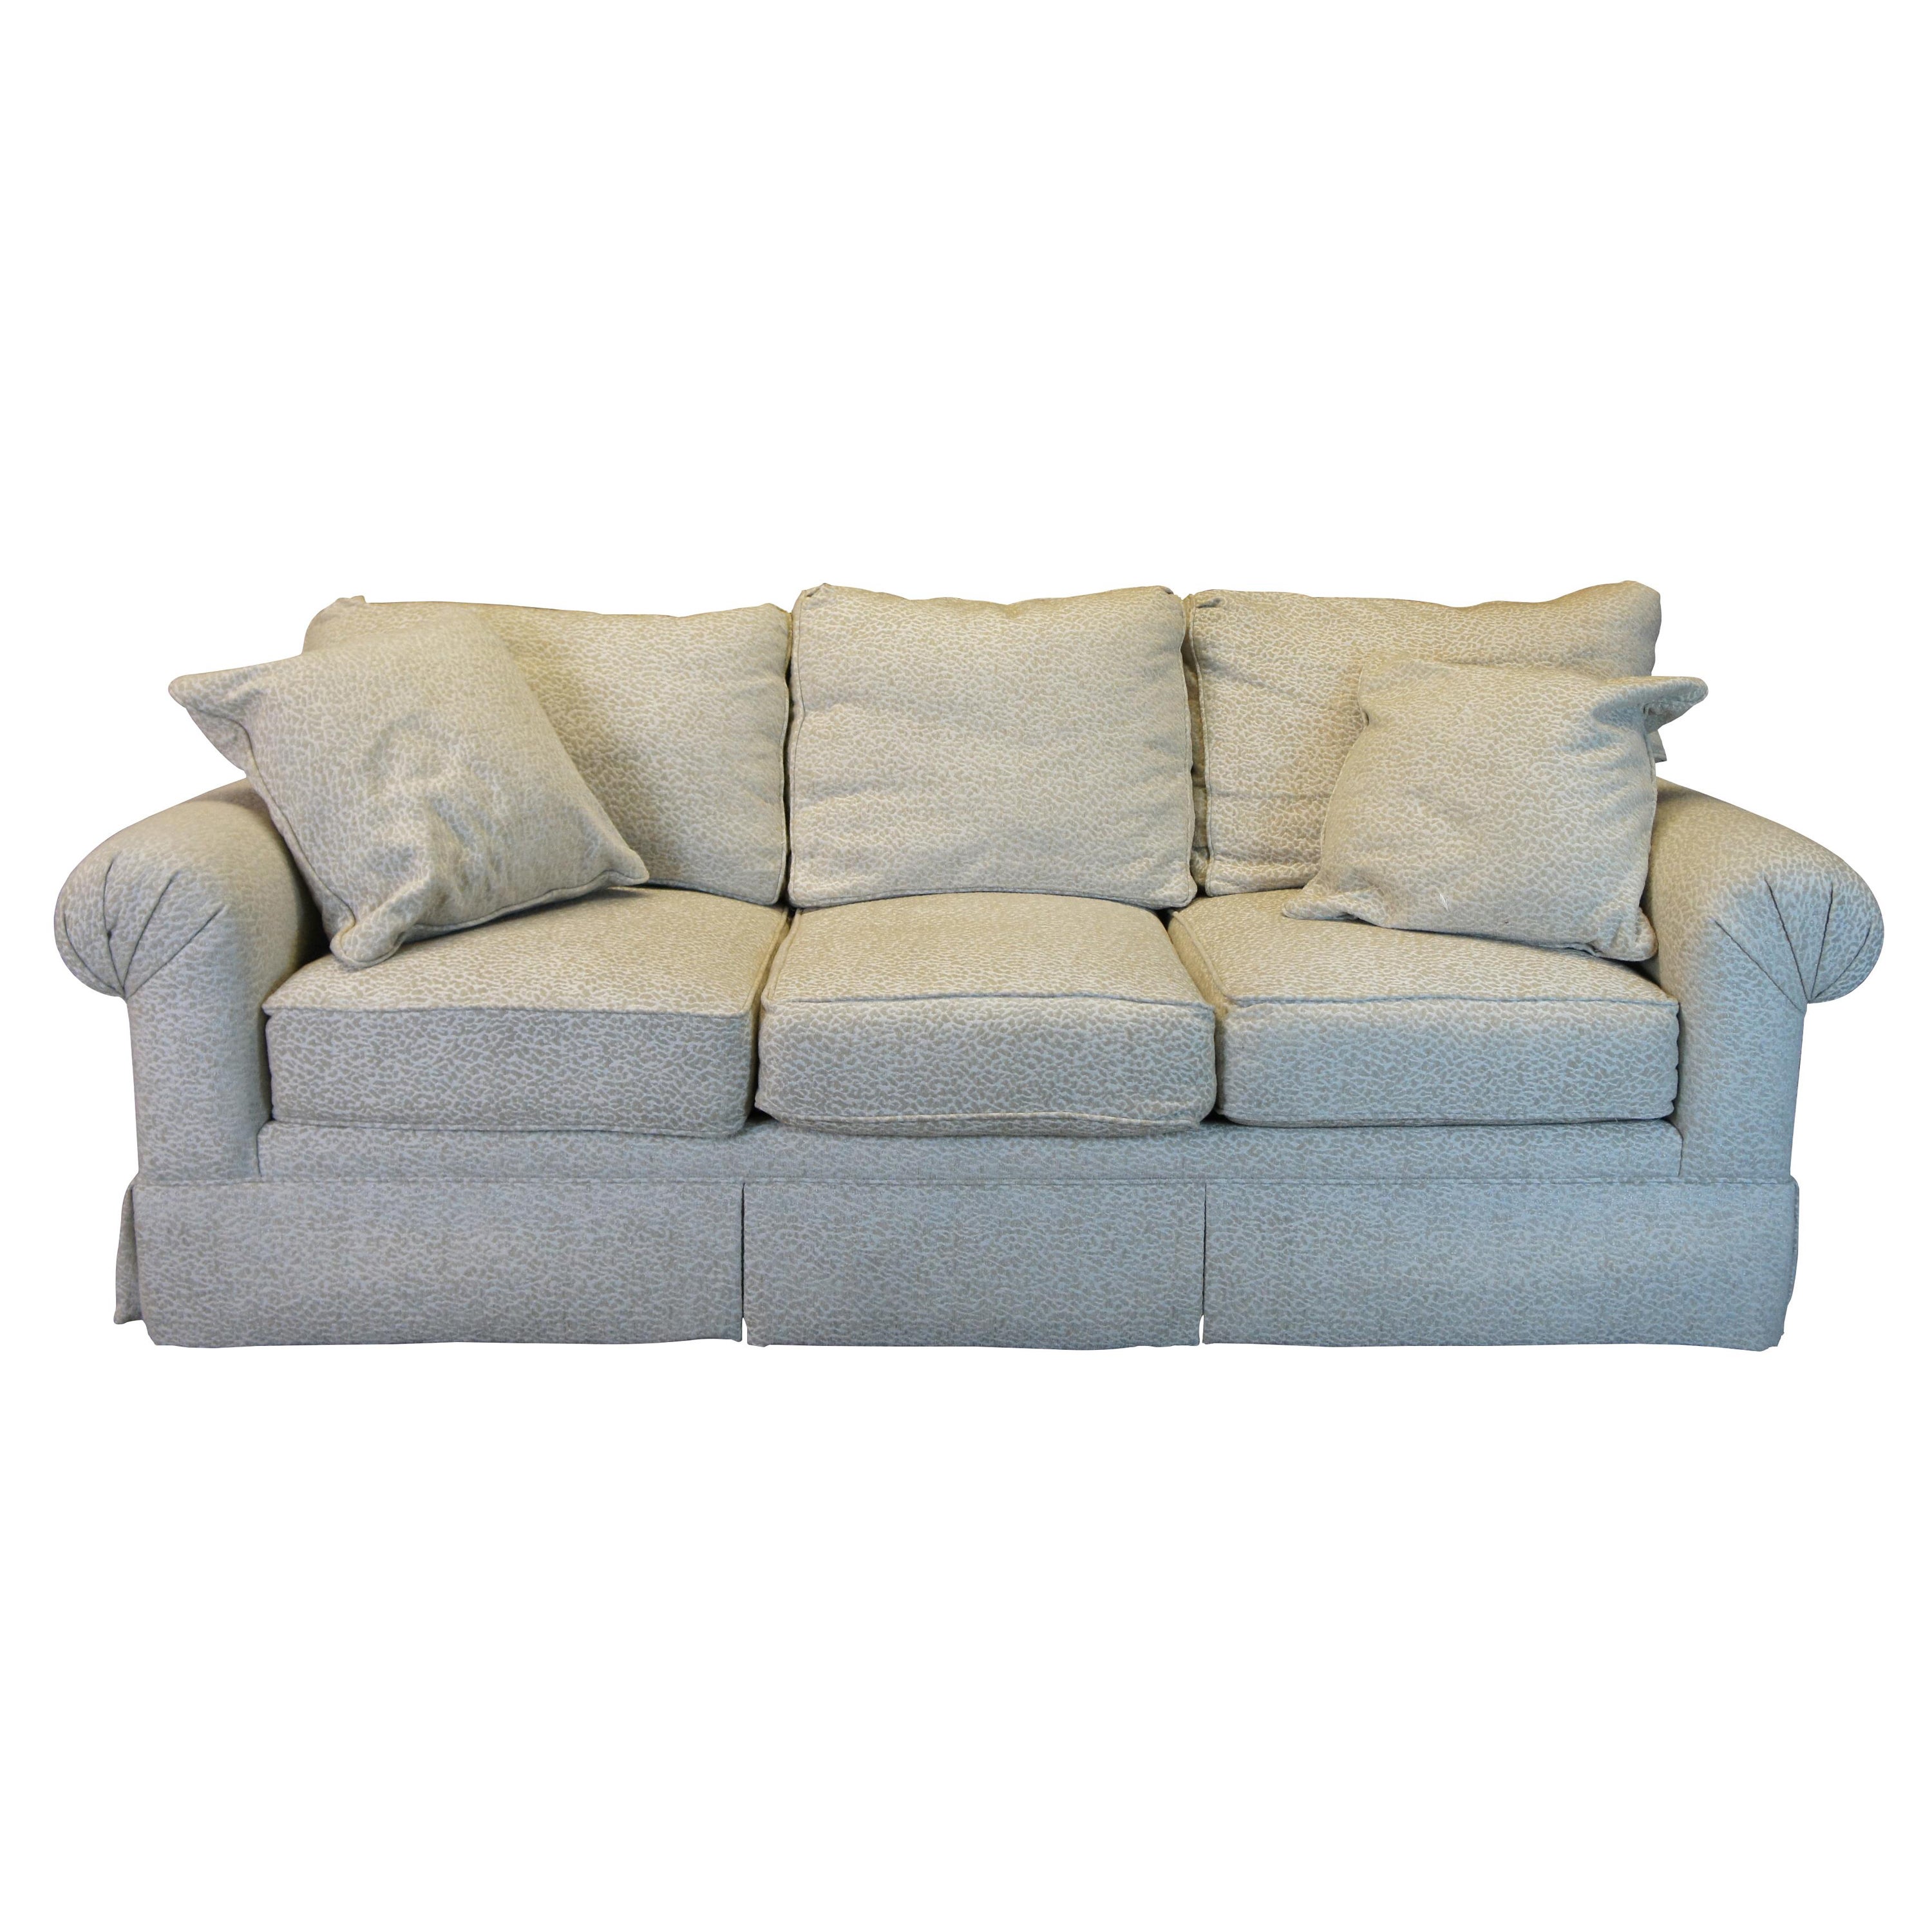 Century Furniture LTD7600-3C Cornerstone 3 Seater Leopard Print Upholstered Sofa